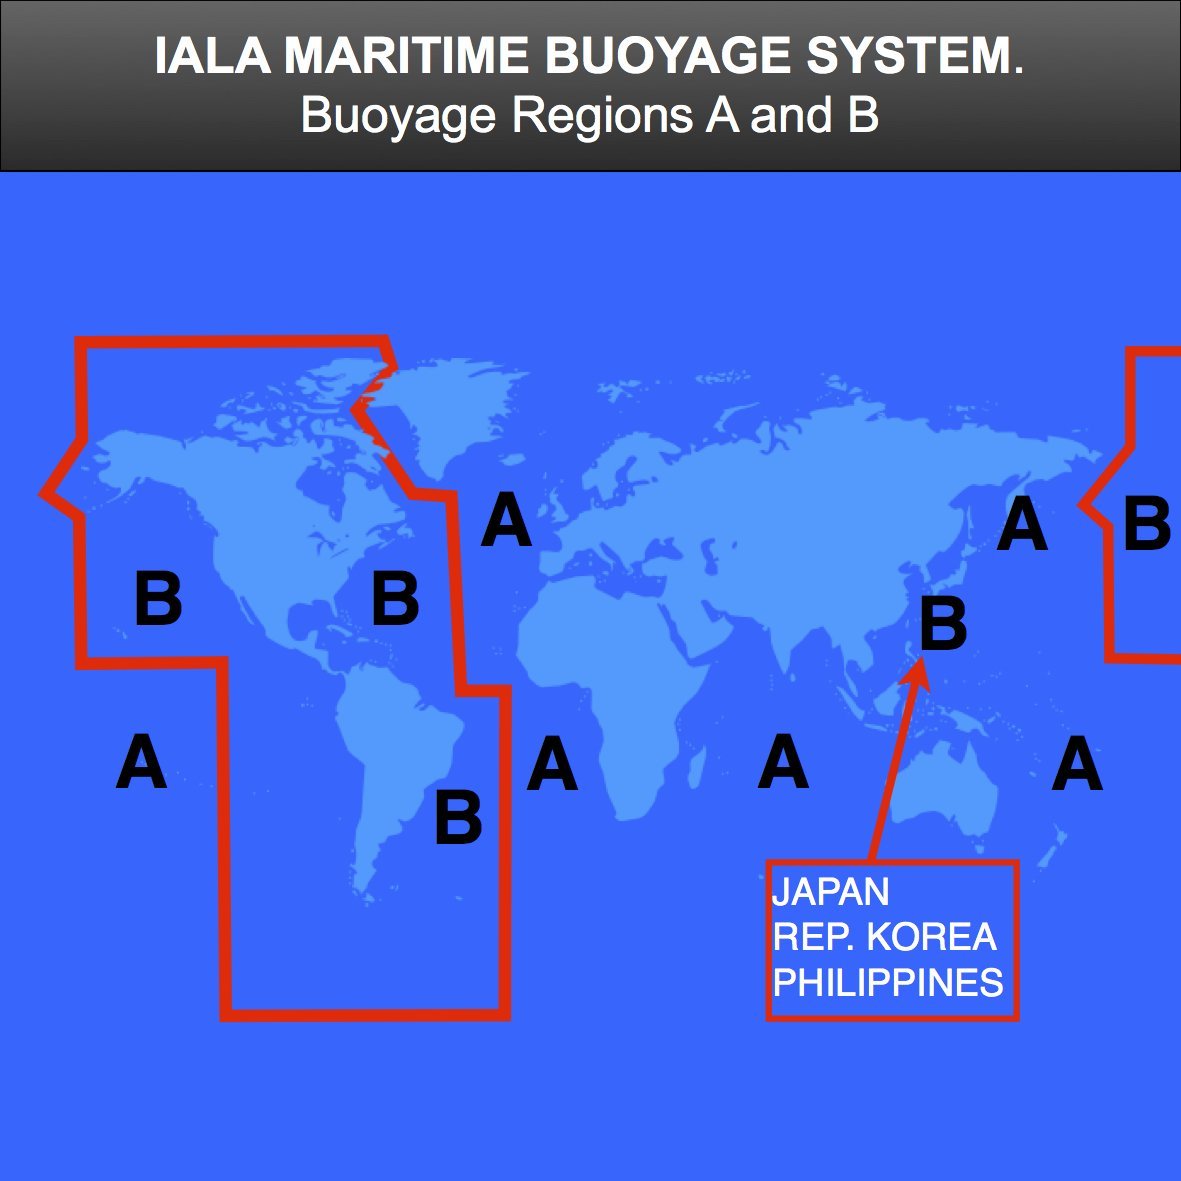 An explanation of the IALA maritime buoyage system